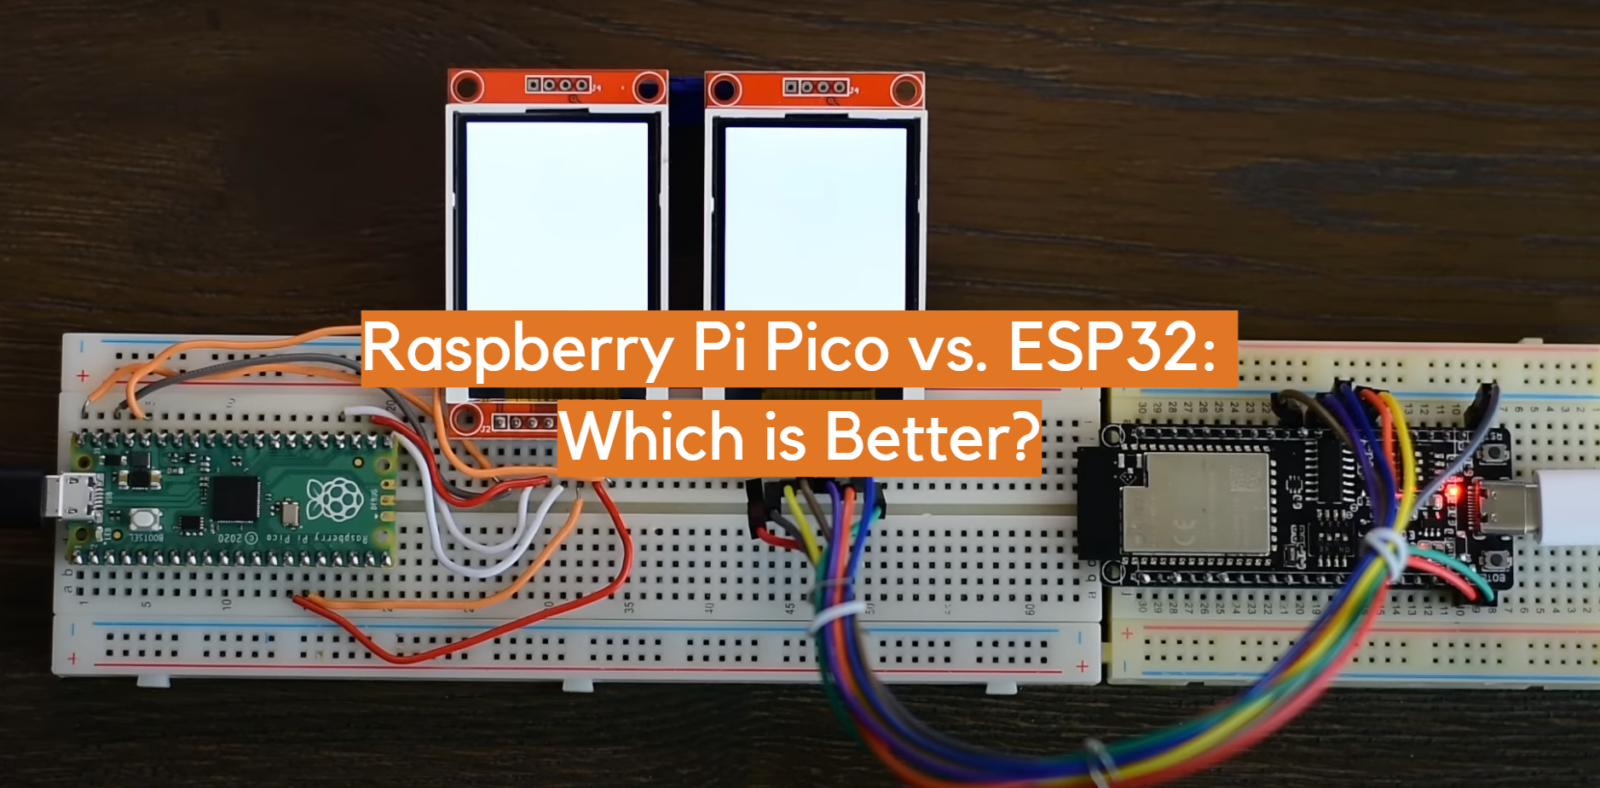 Raspberry Pi Pico vs. ESP32: Which is Better?